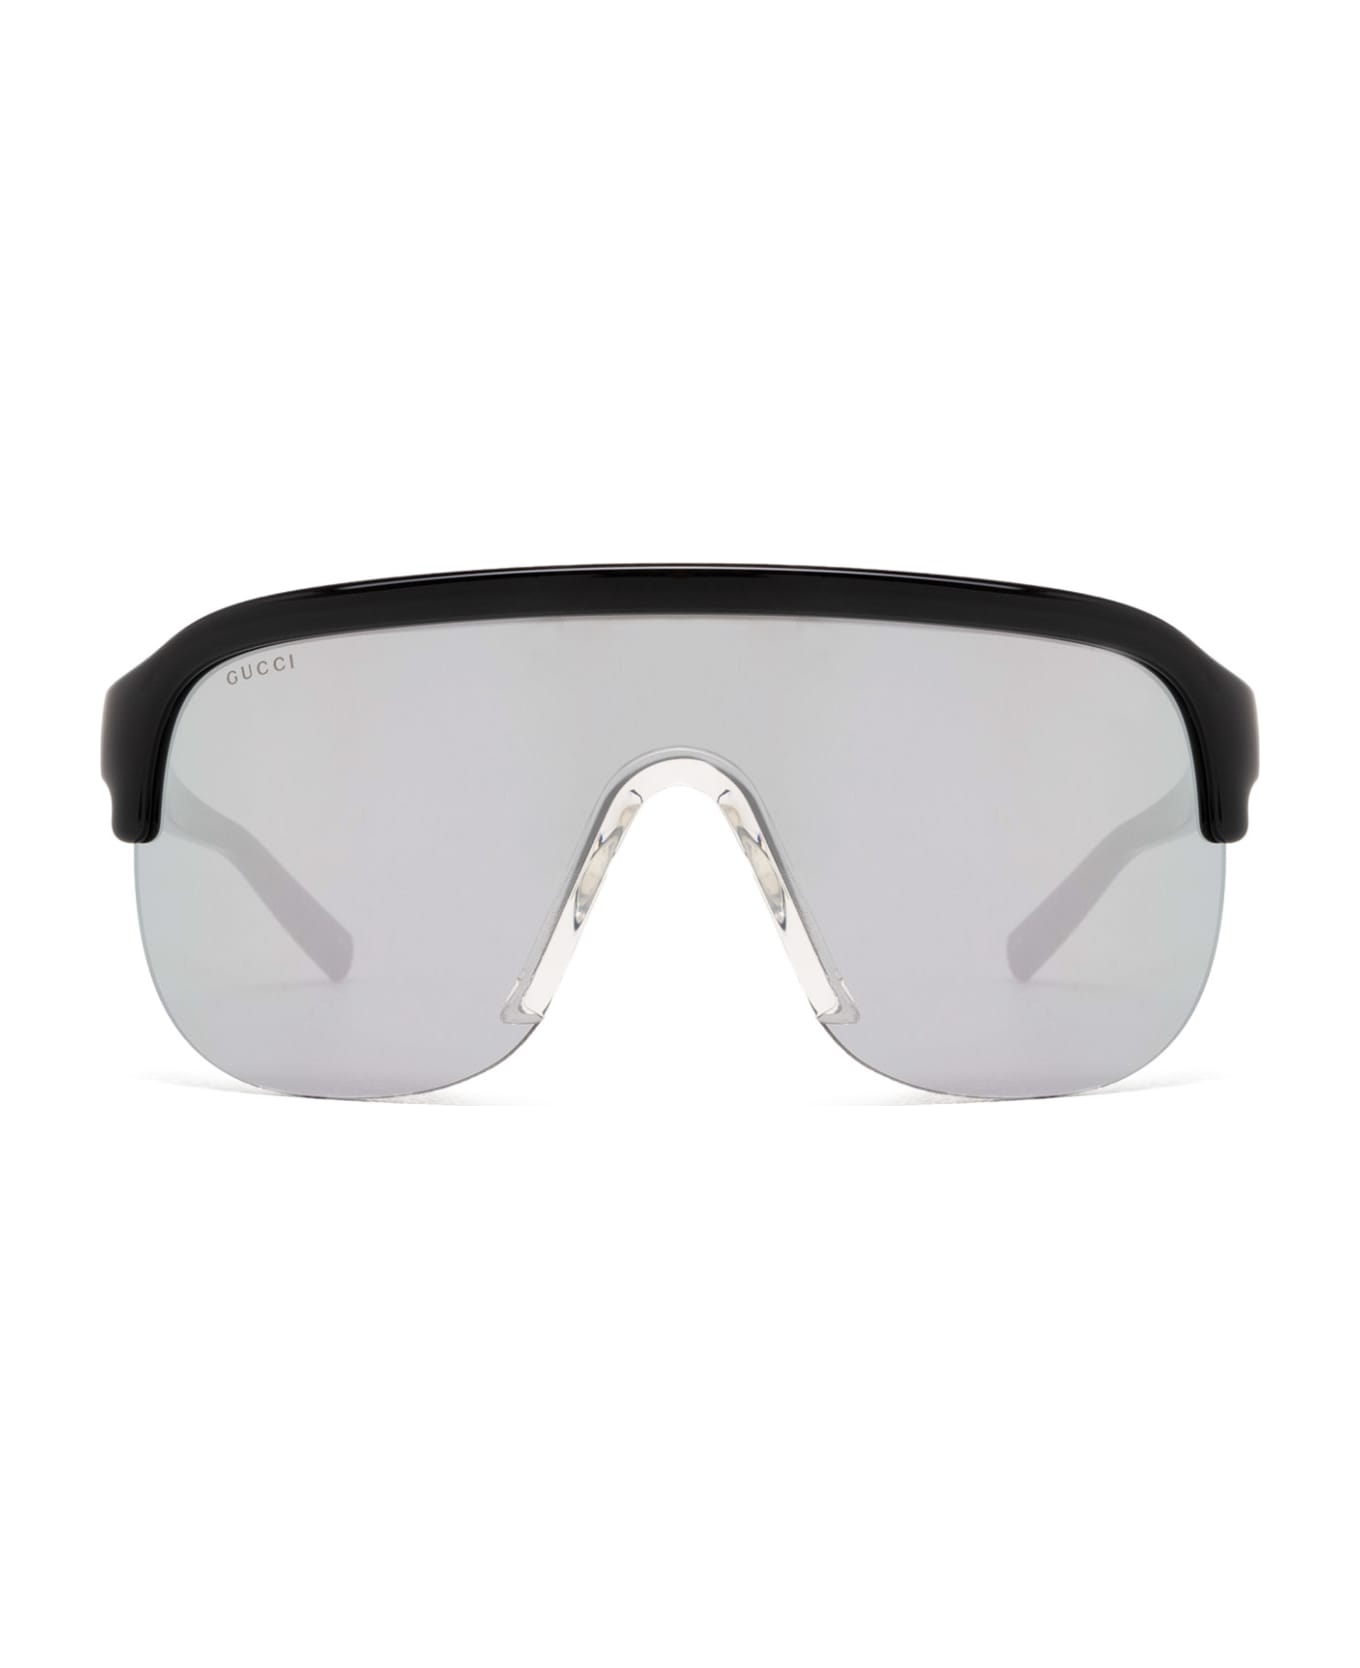 Gucci Eyewear Gg1645s Black Sunglasses - Black